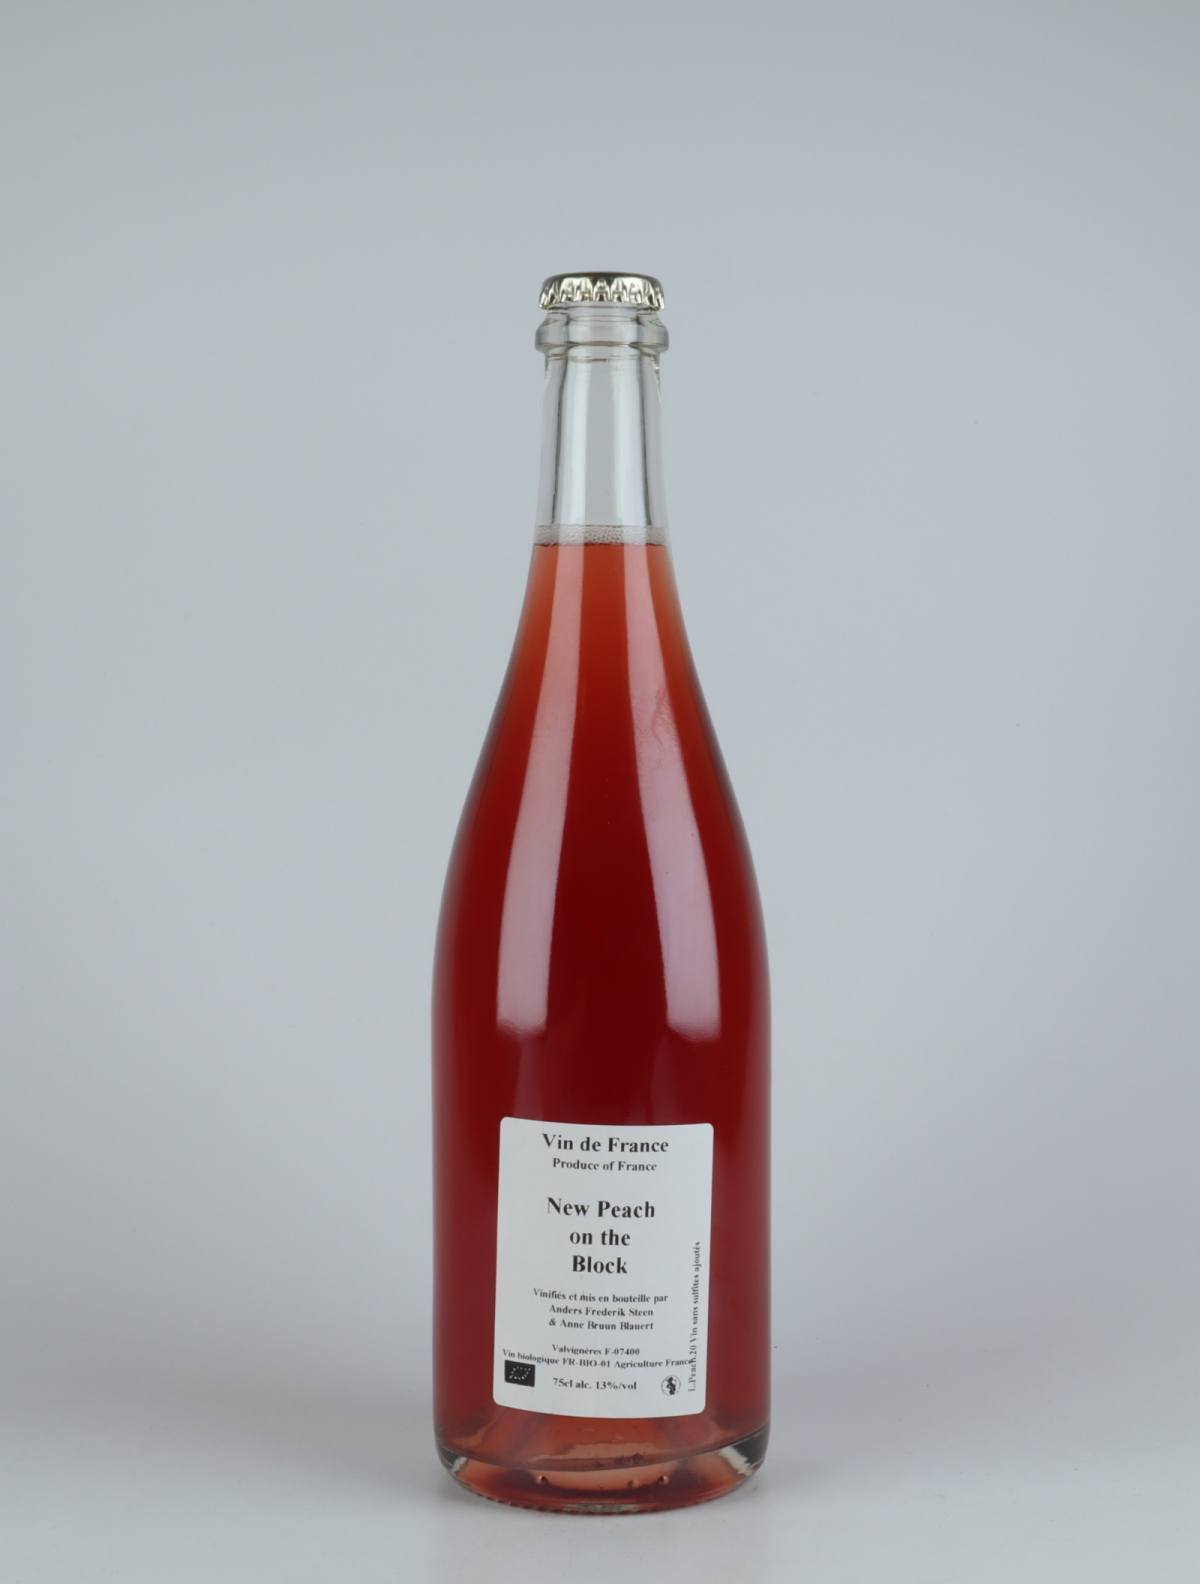 A bottle 2020 New Peach on the Block Rosé from Anders Frederik Steen & Anne Bruun Blauert, Ardèche in France